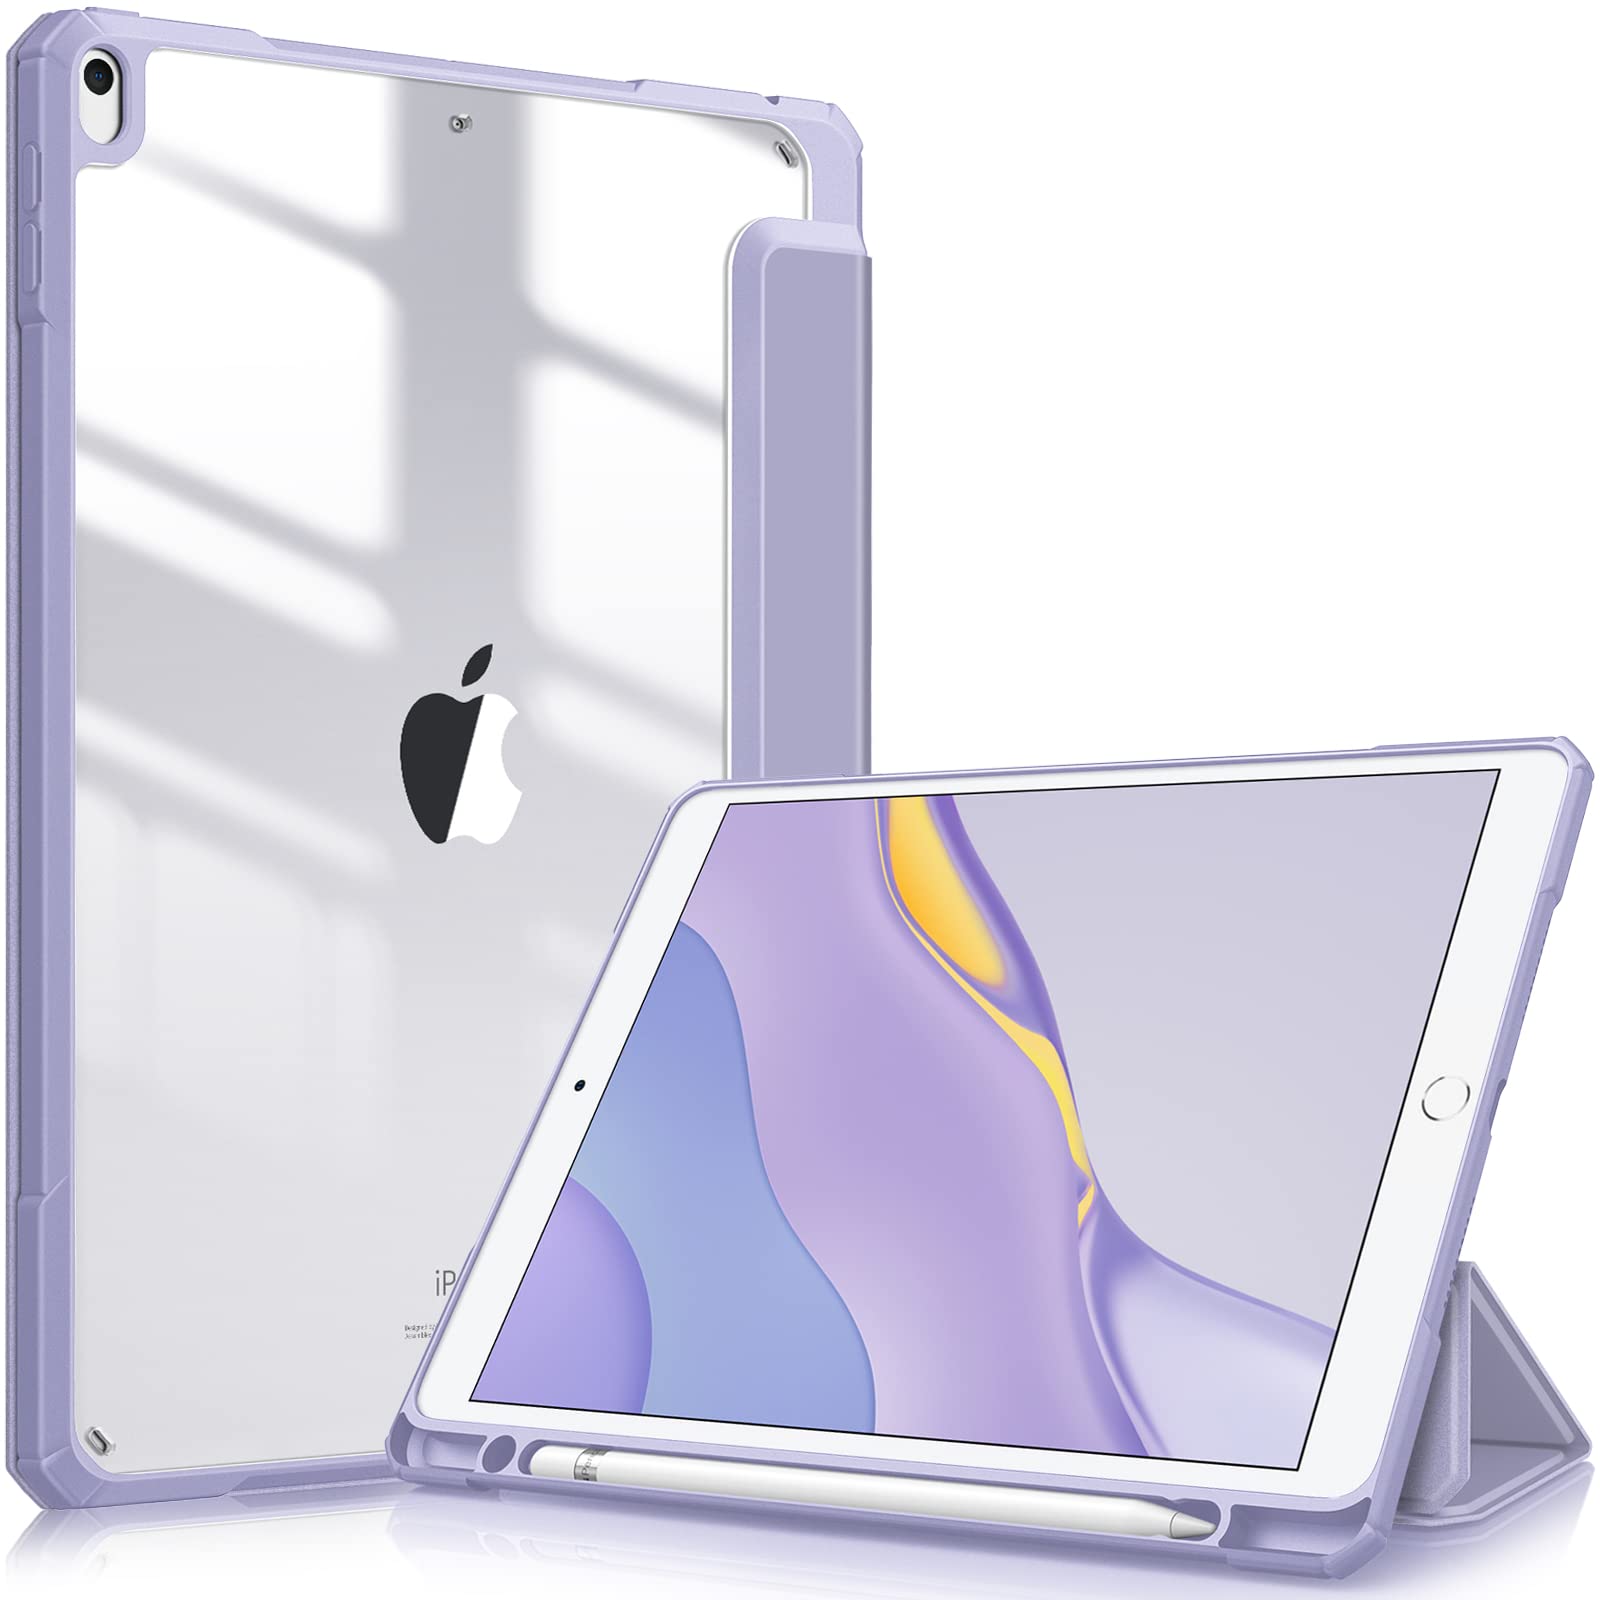 Fintie iPad Air 2019 ケース iPad Air3 10.5インチ / iPad Pro 10.5 2017 透明バックカバー Apple Pencil 収納可能 三つ折スタンド スリープ機能 軽量 薄型 傷つけ防止 PU合成レザー TPU (モデル番号A2152 A2123 A2153 A1701 A1709)(ライラックパープル)